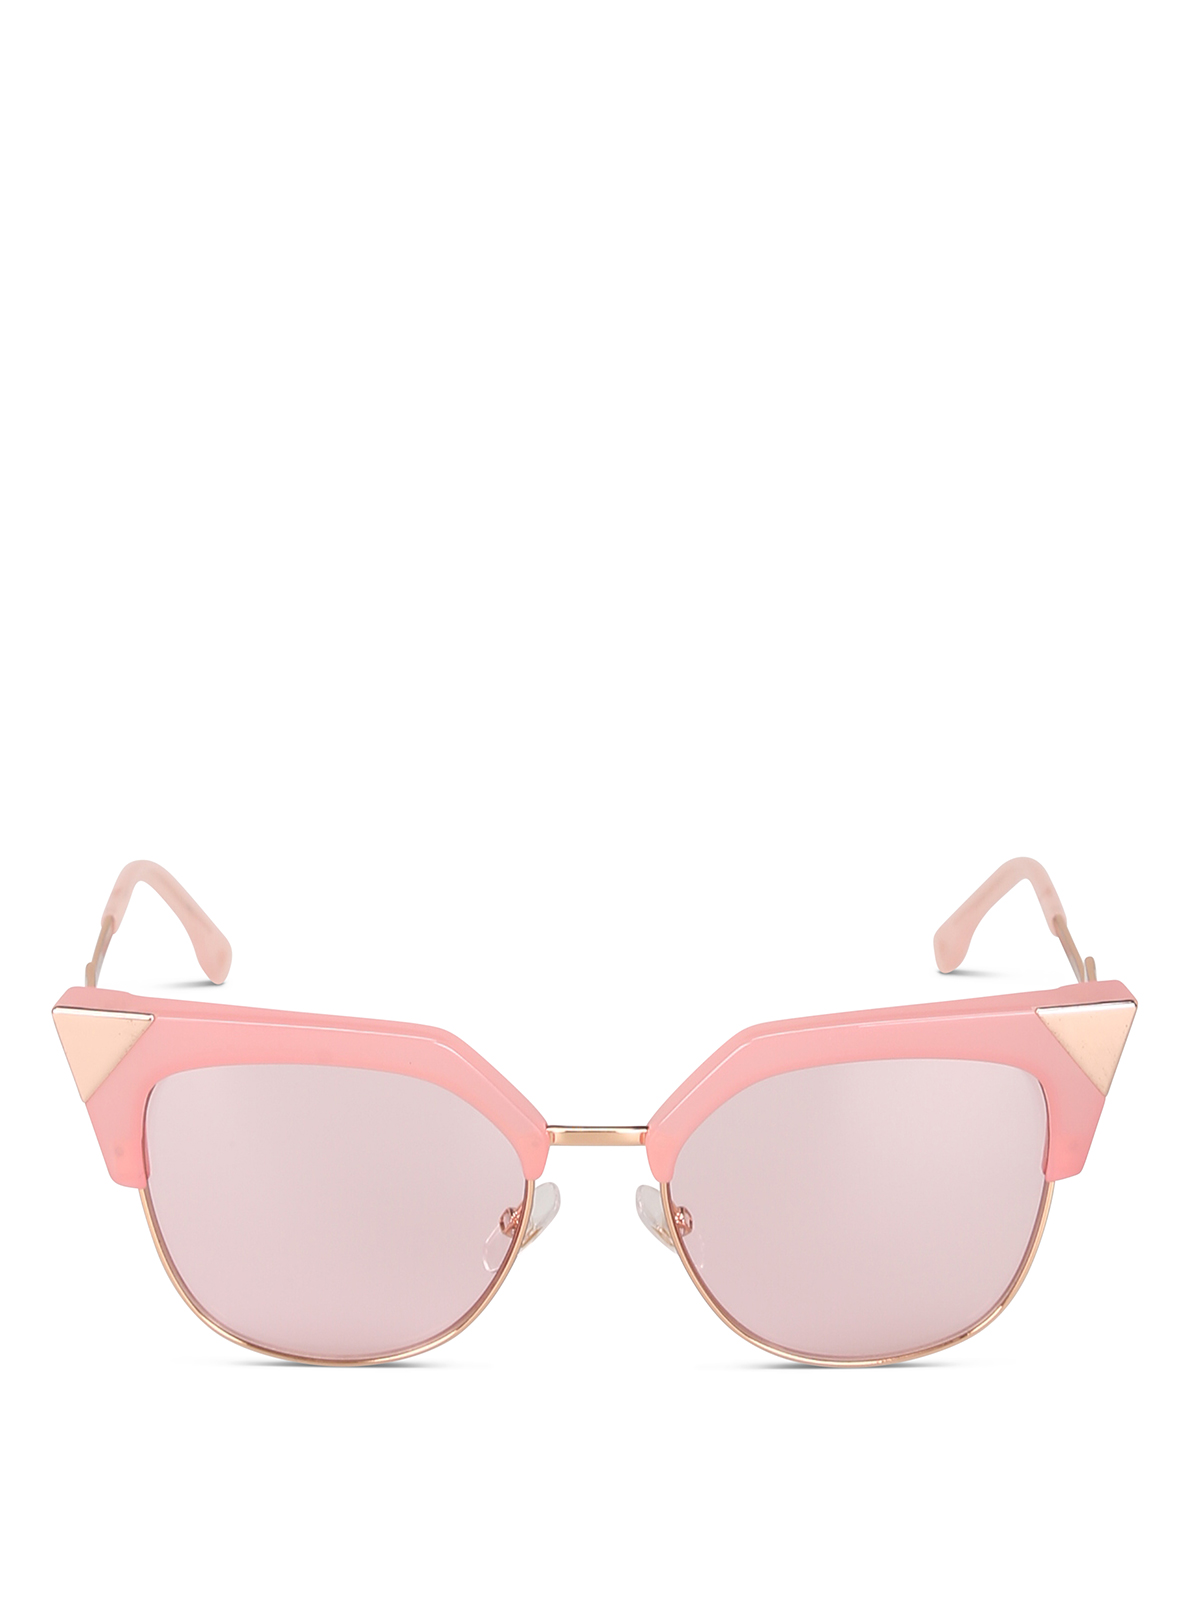 Sunglasses Fendi, Style code: ff0149s-35j-q4